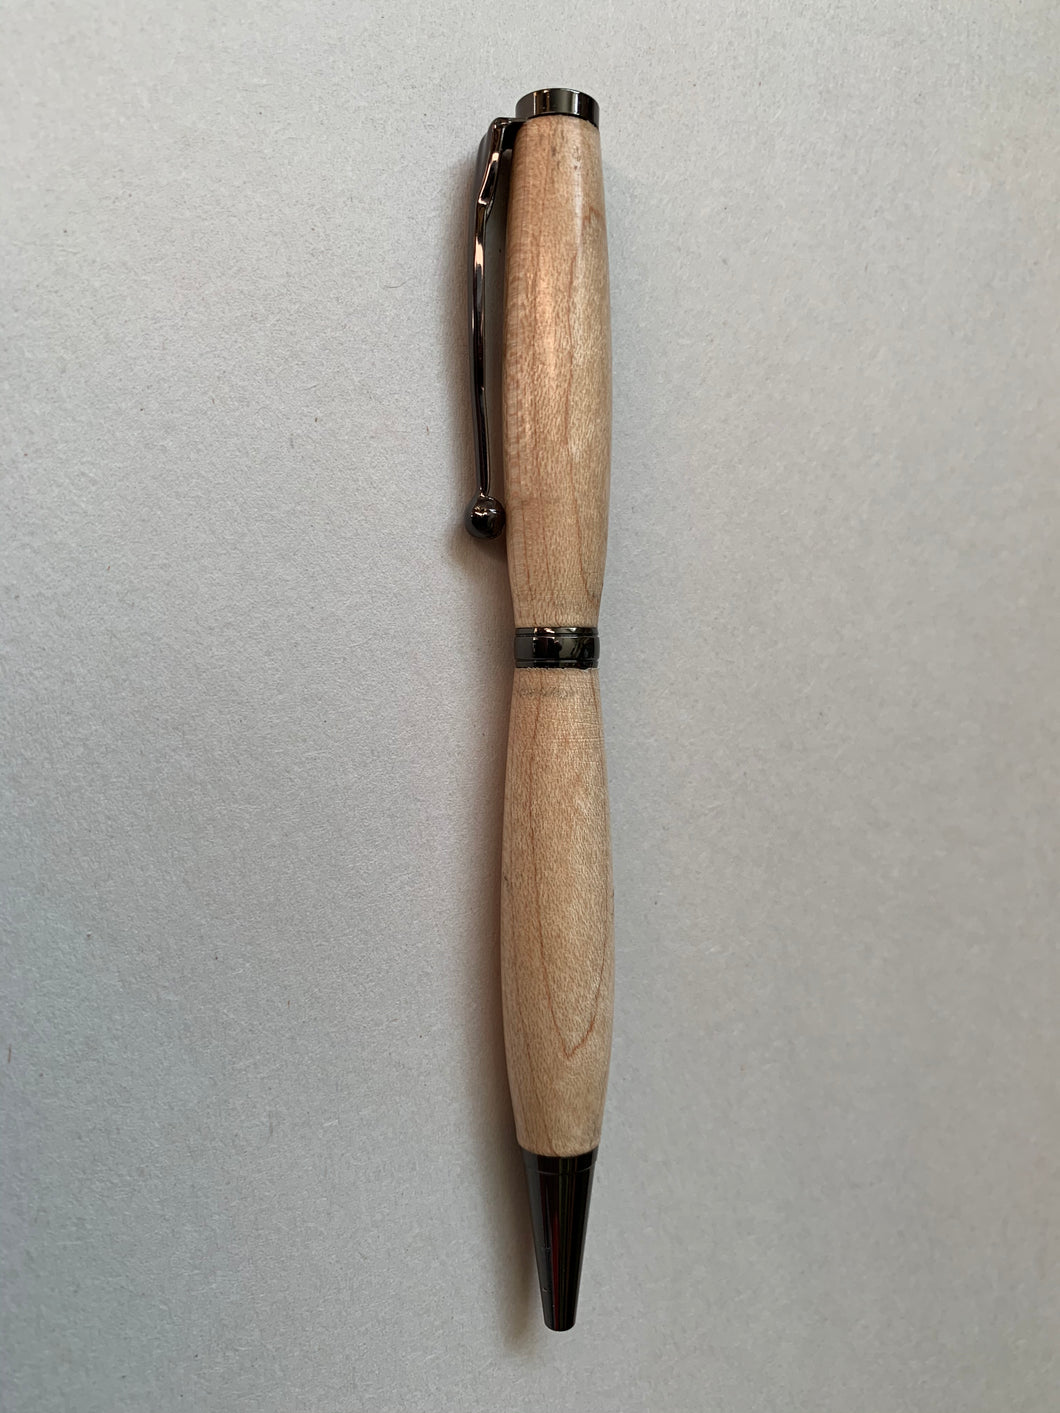 American pen - Maple